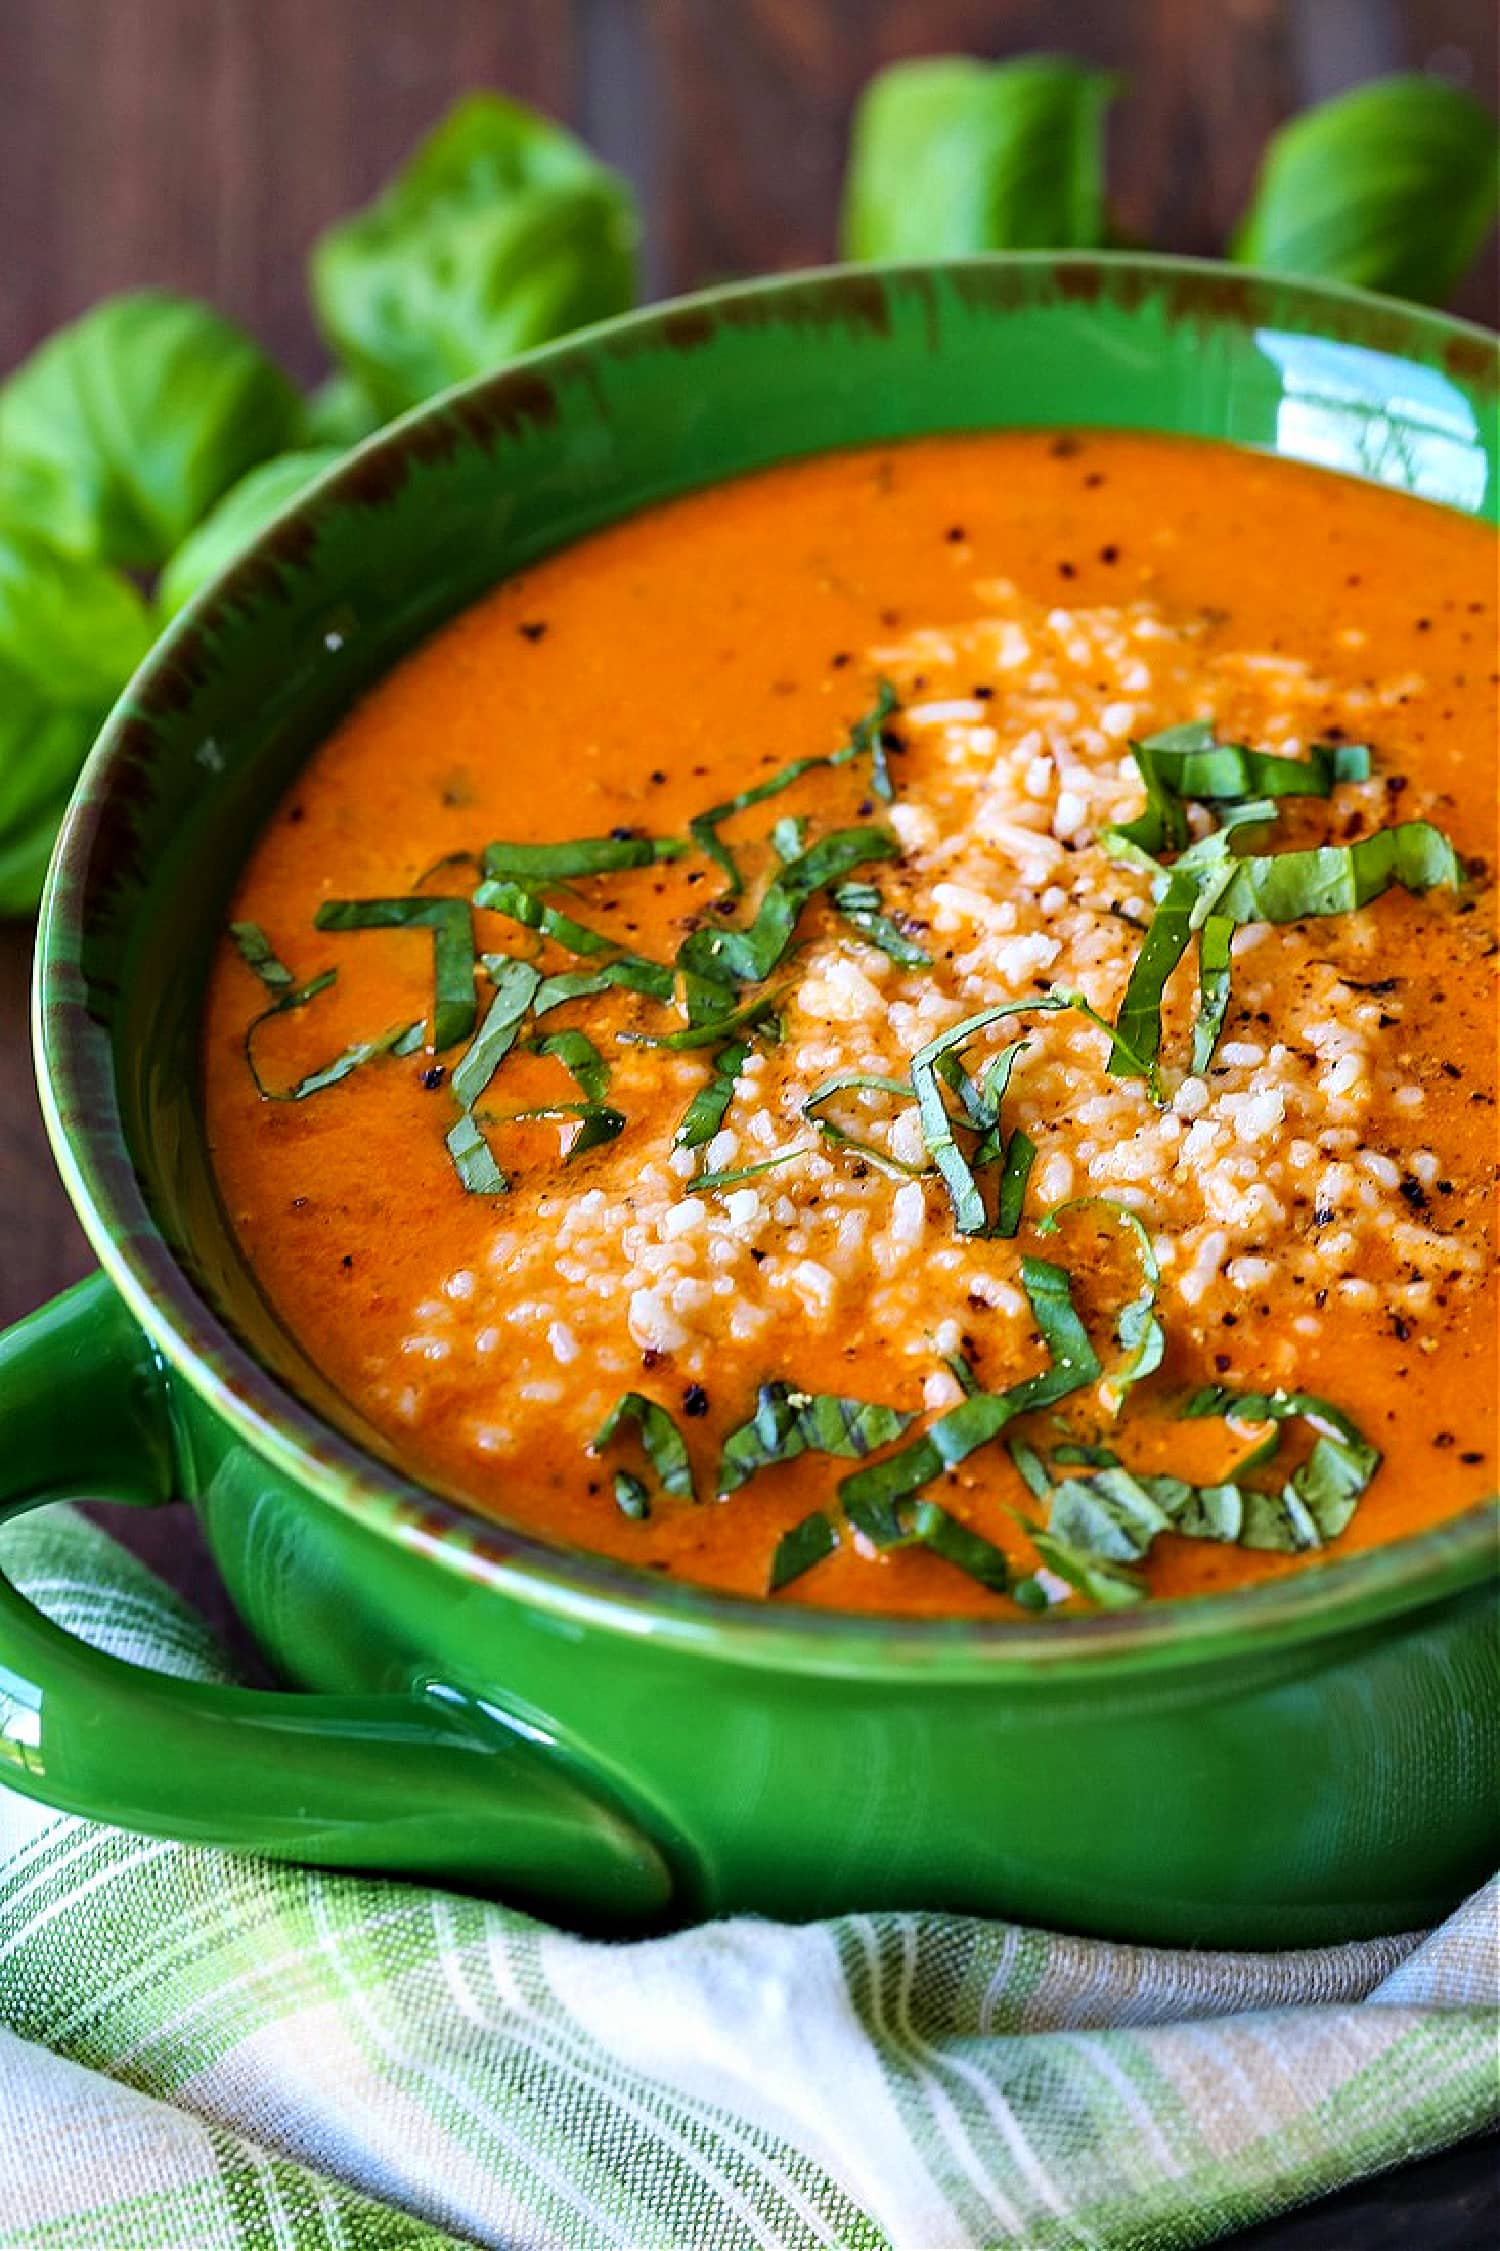 Homemade Roasted Tomato Basil Soup